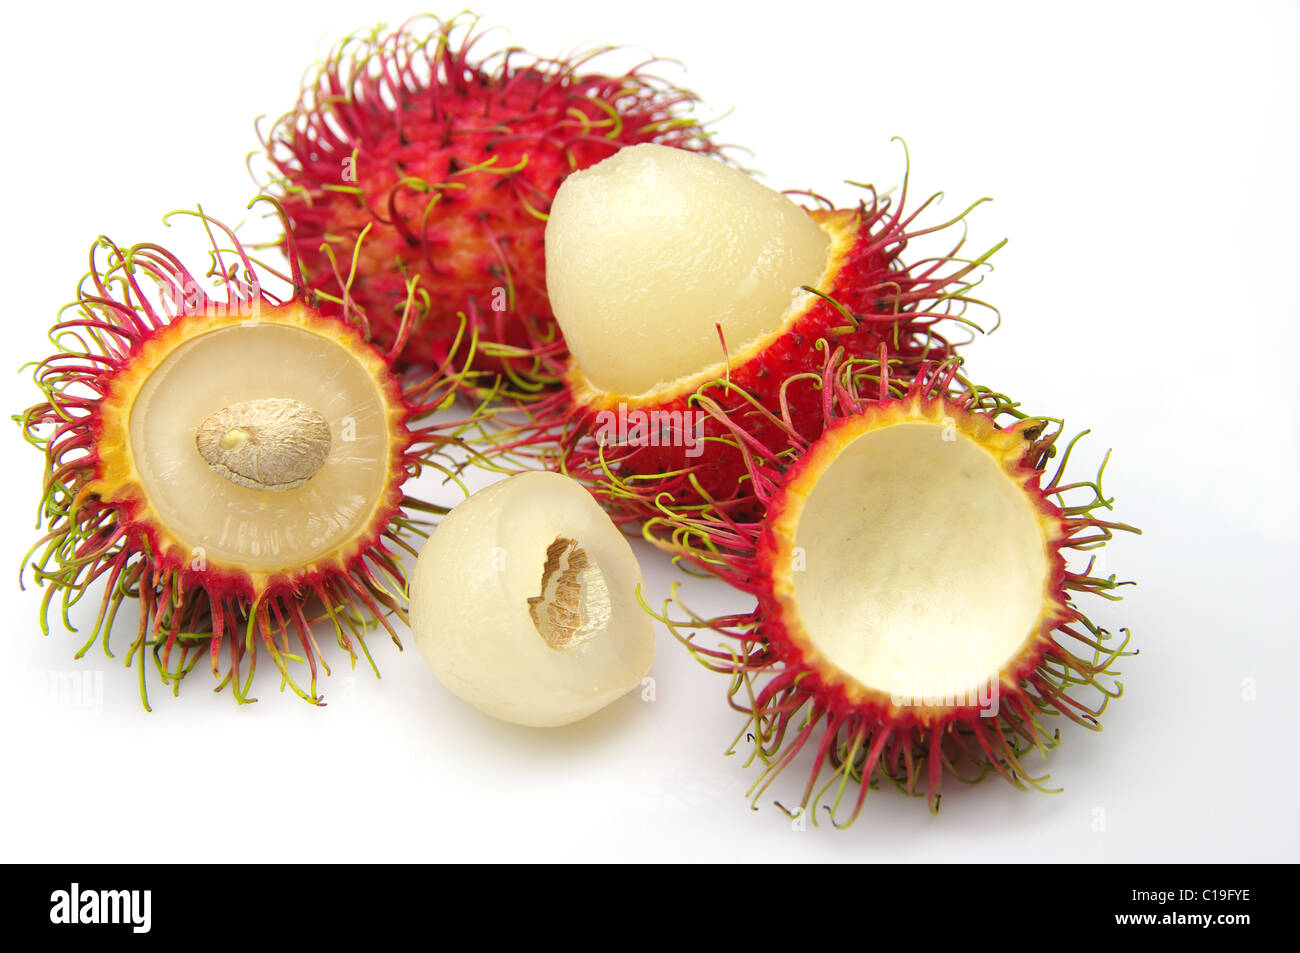 Hairy, red Rambutan fruit (Nephelium lappaceum). Whole fruits, some peeled, showing white edible flesh and seed. Shot on white. Stock Photo